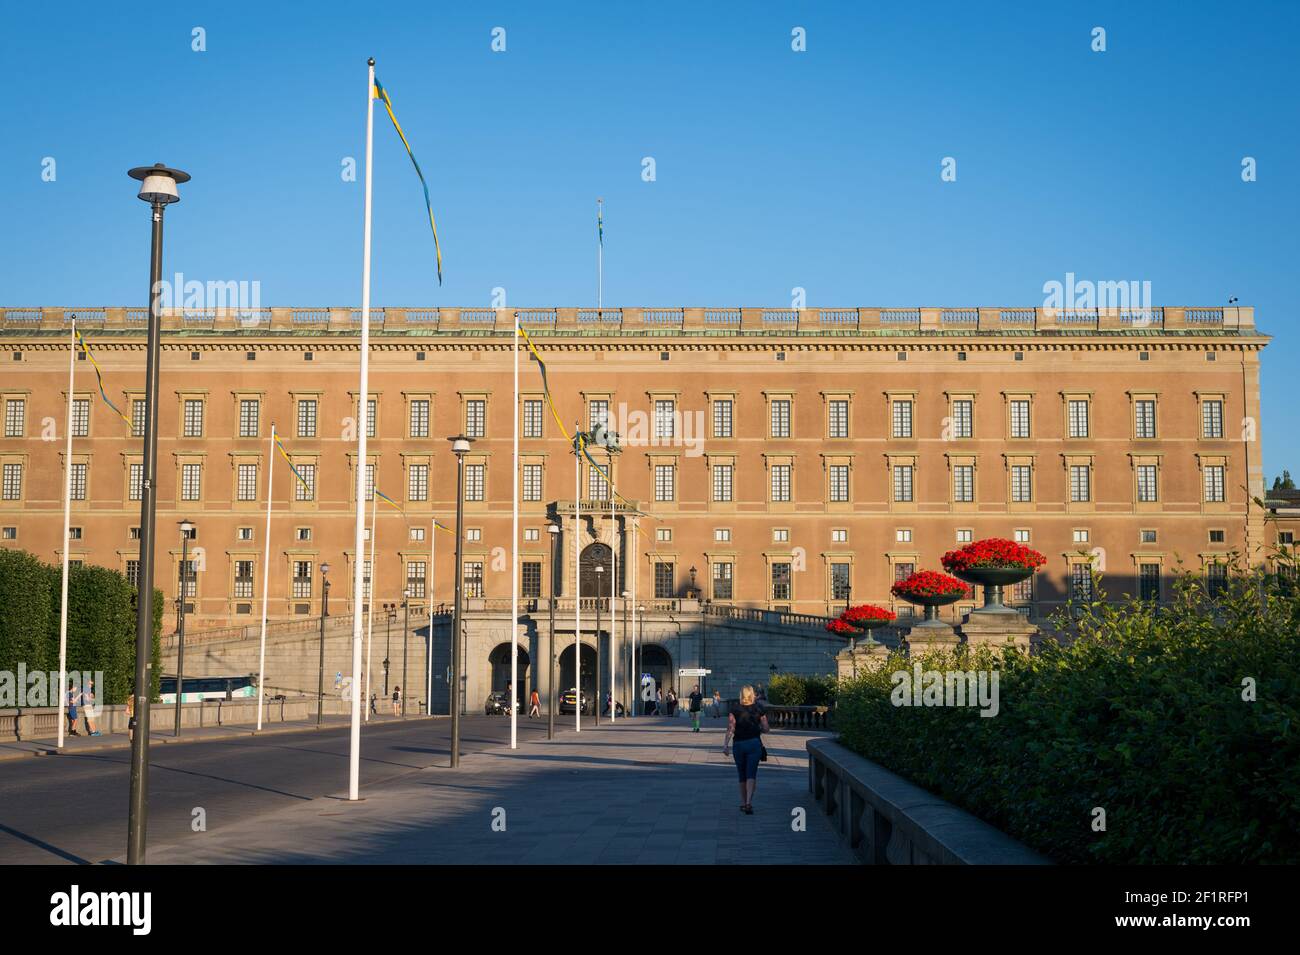 Palais royal de Stockholm (Kungliga slottet), Gamla Stan, Stockholm, Suède. Banque D'Images